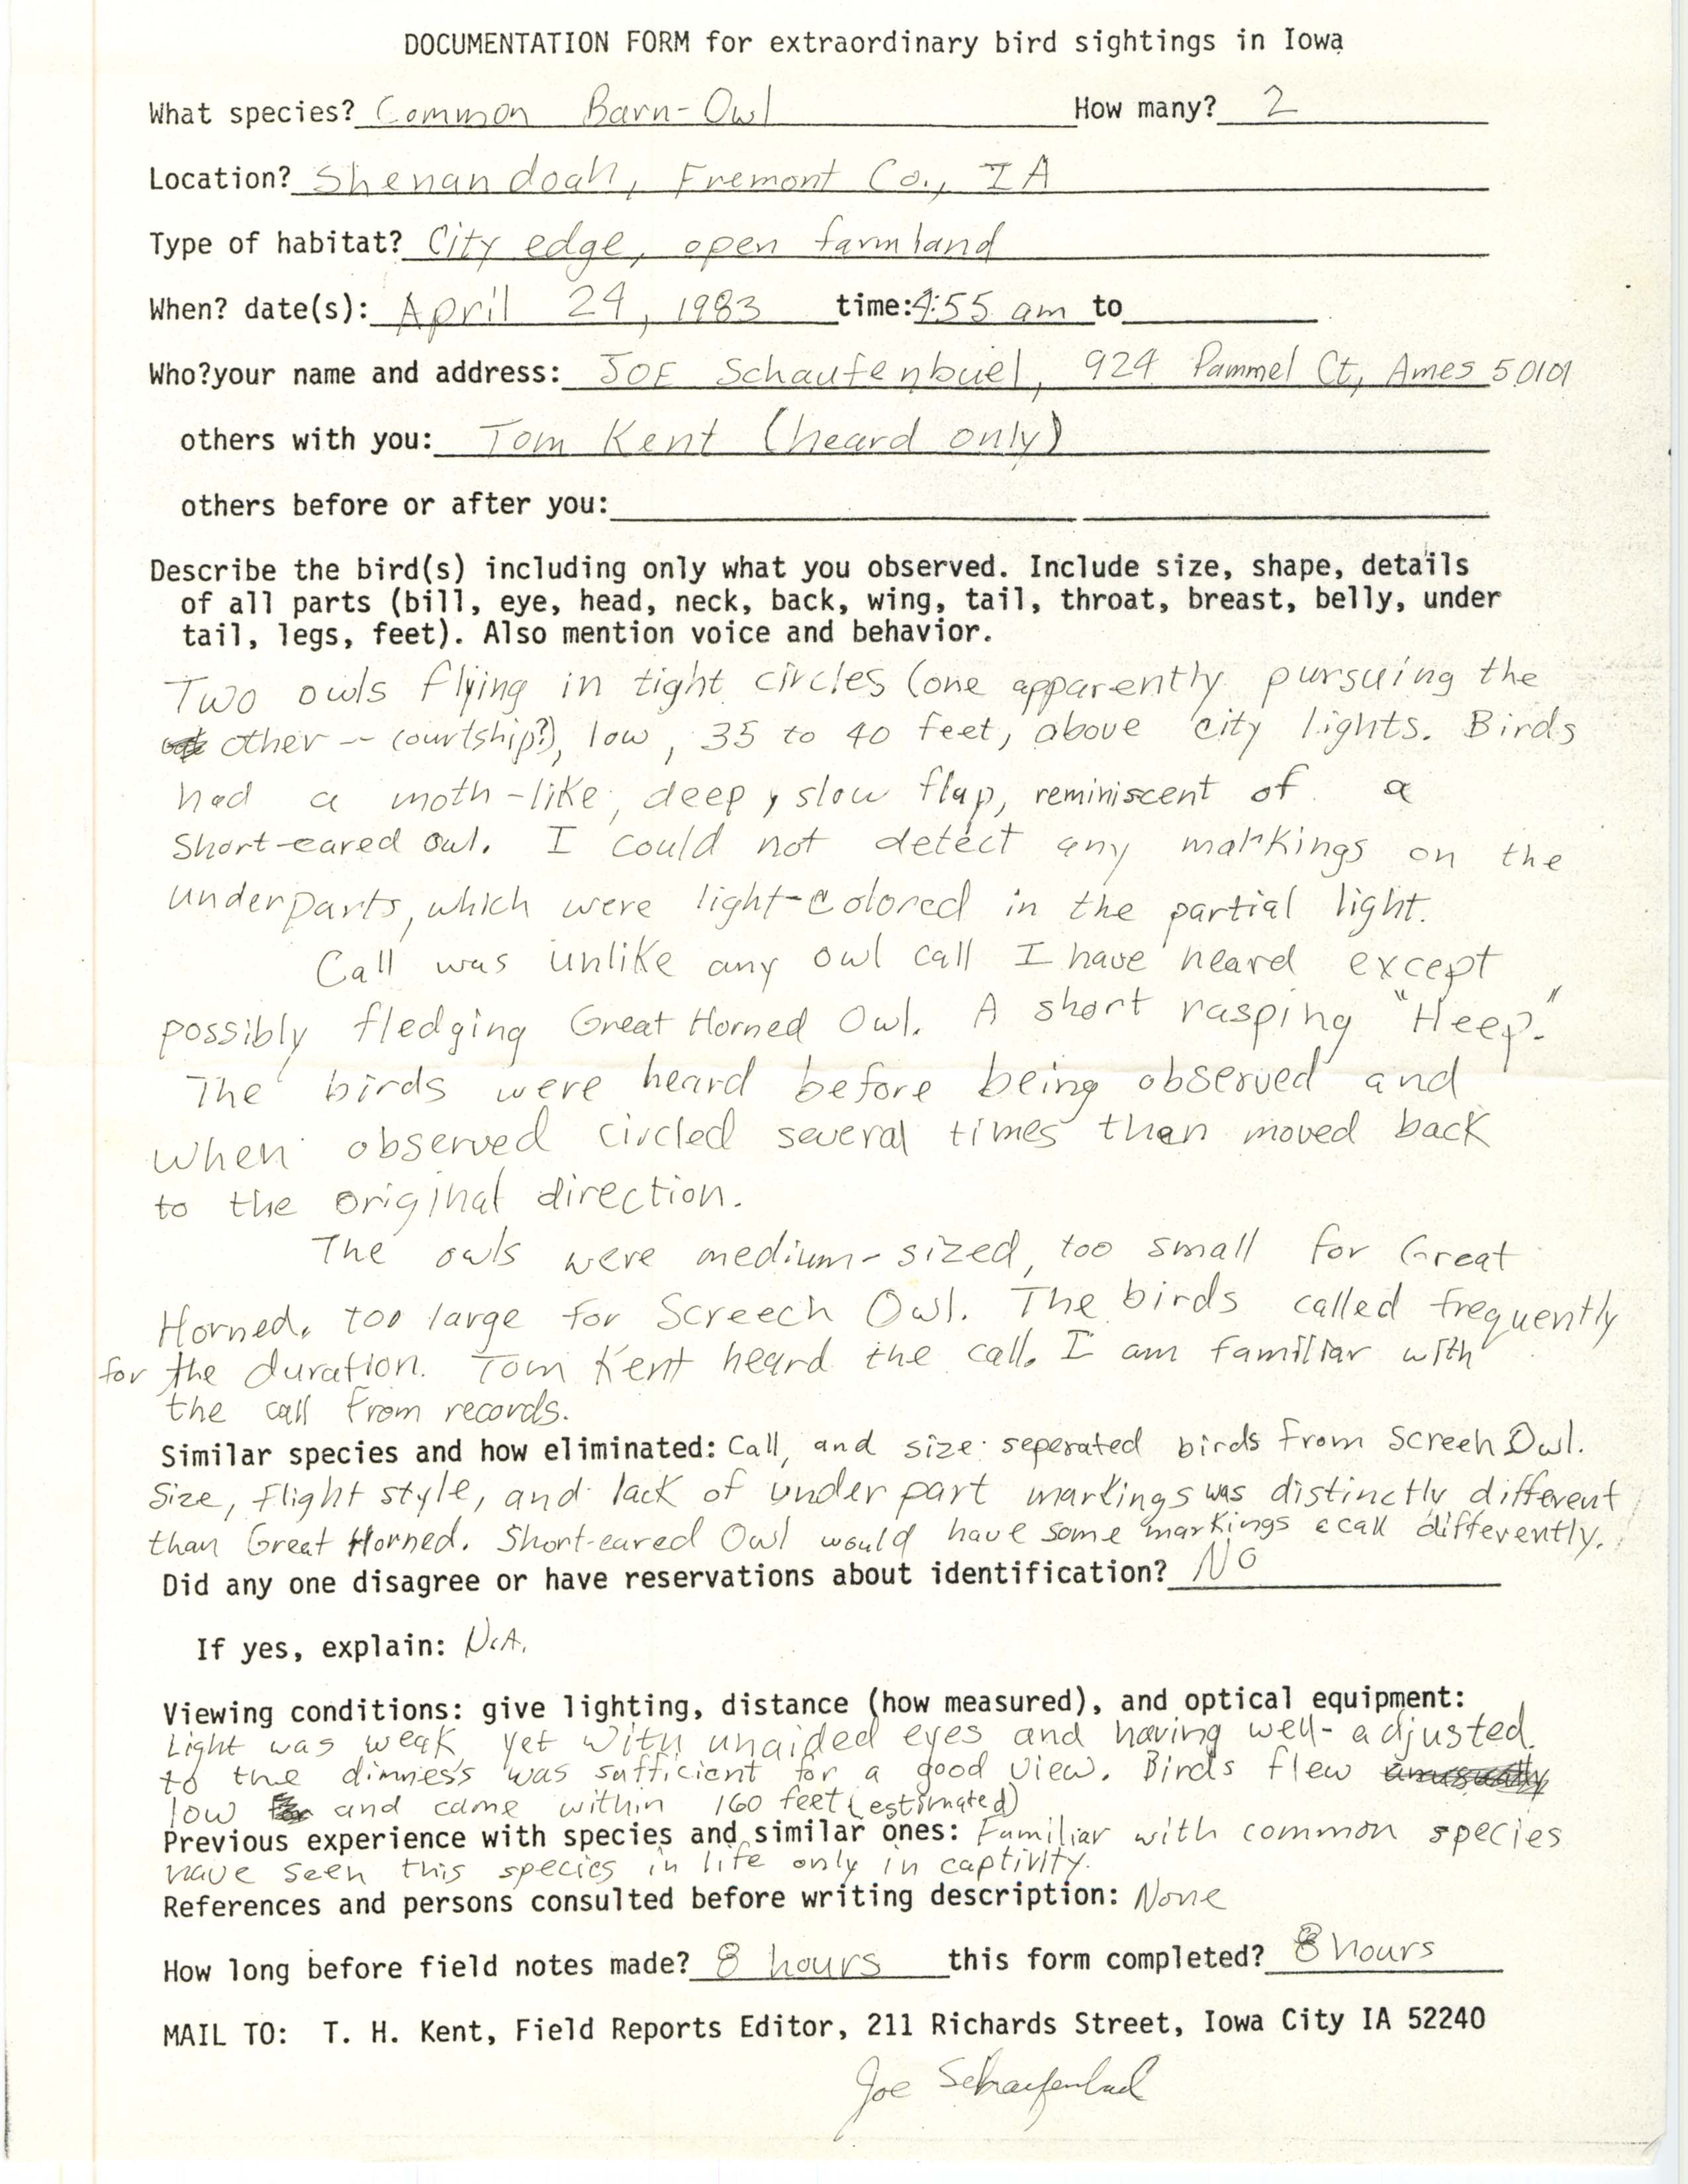 Rare bird documentation form for Common Barn Owl at Shenandoah, 1983